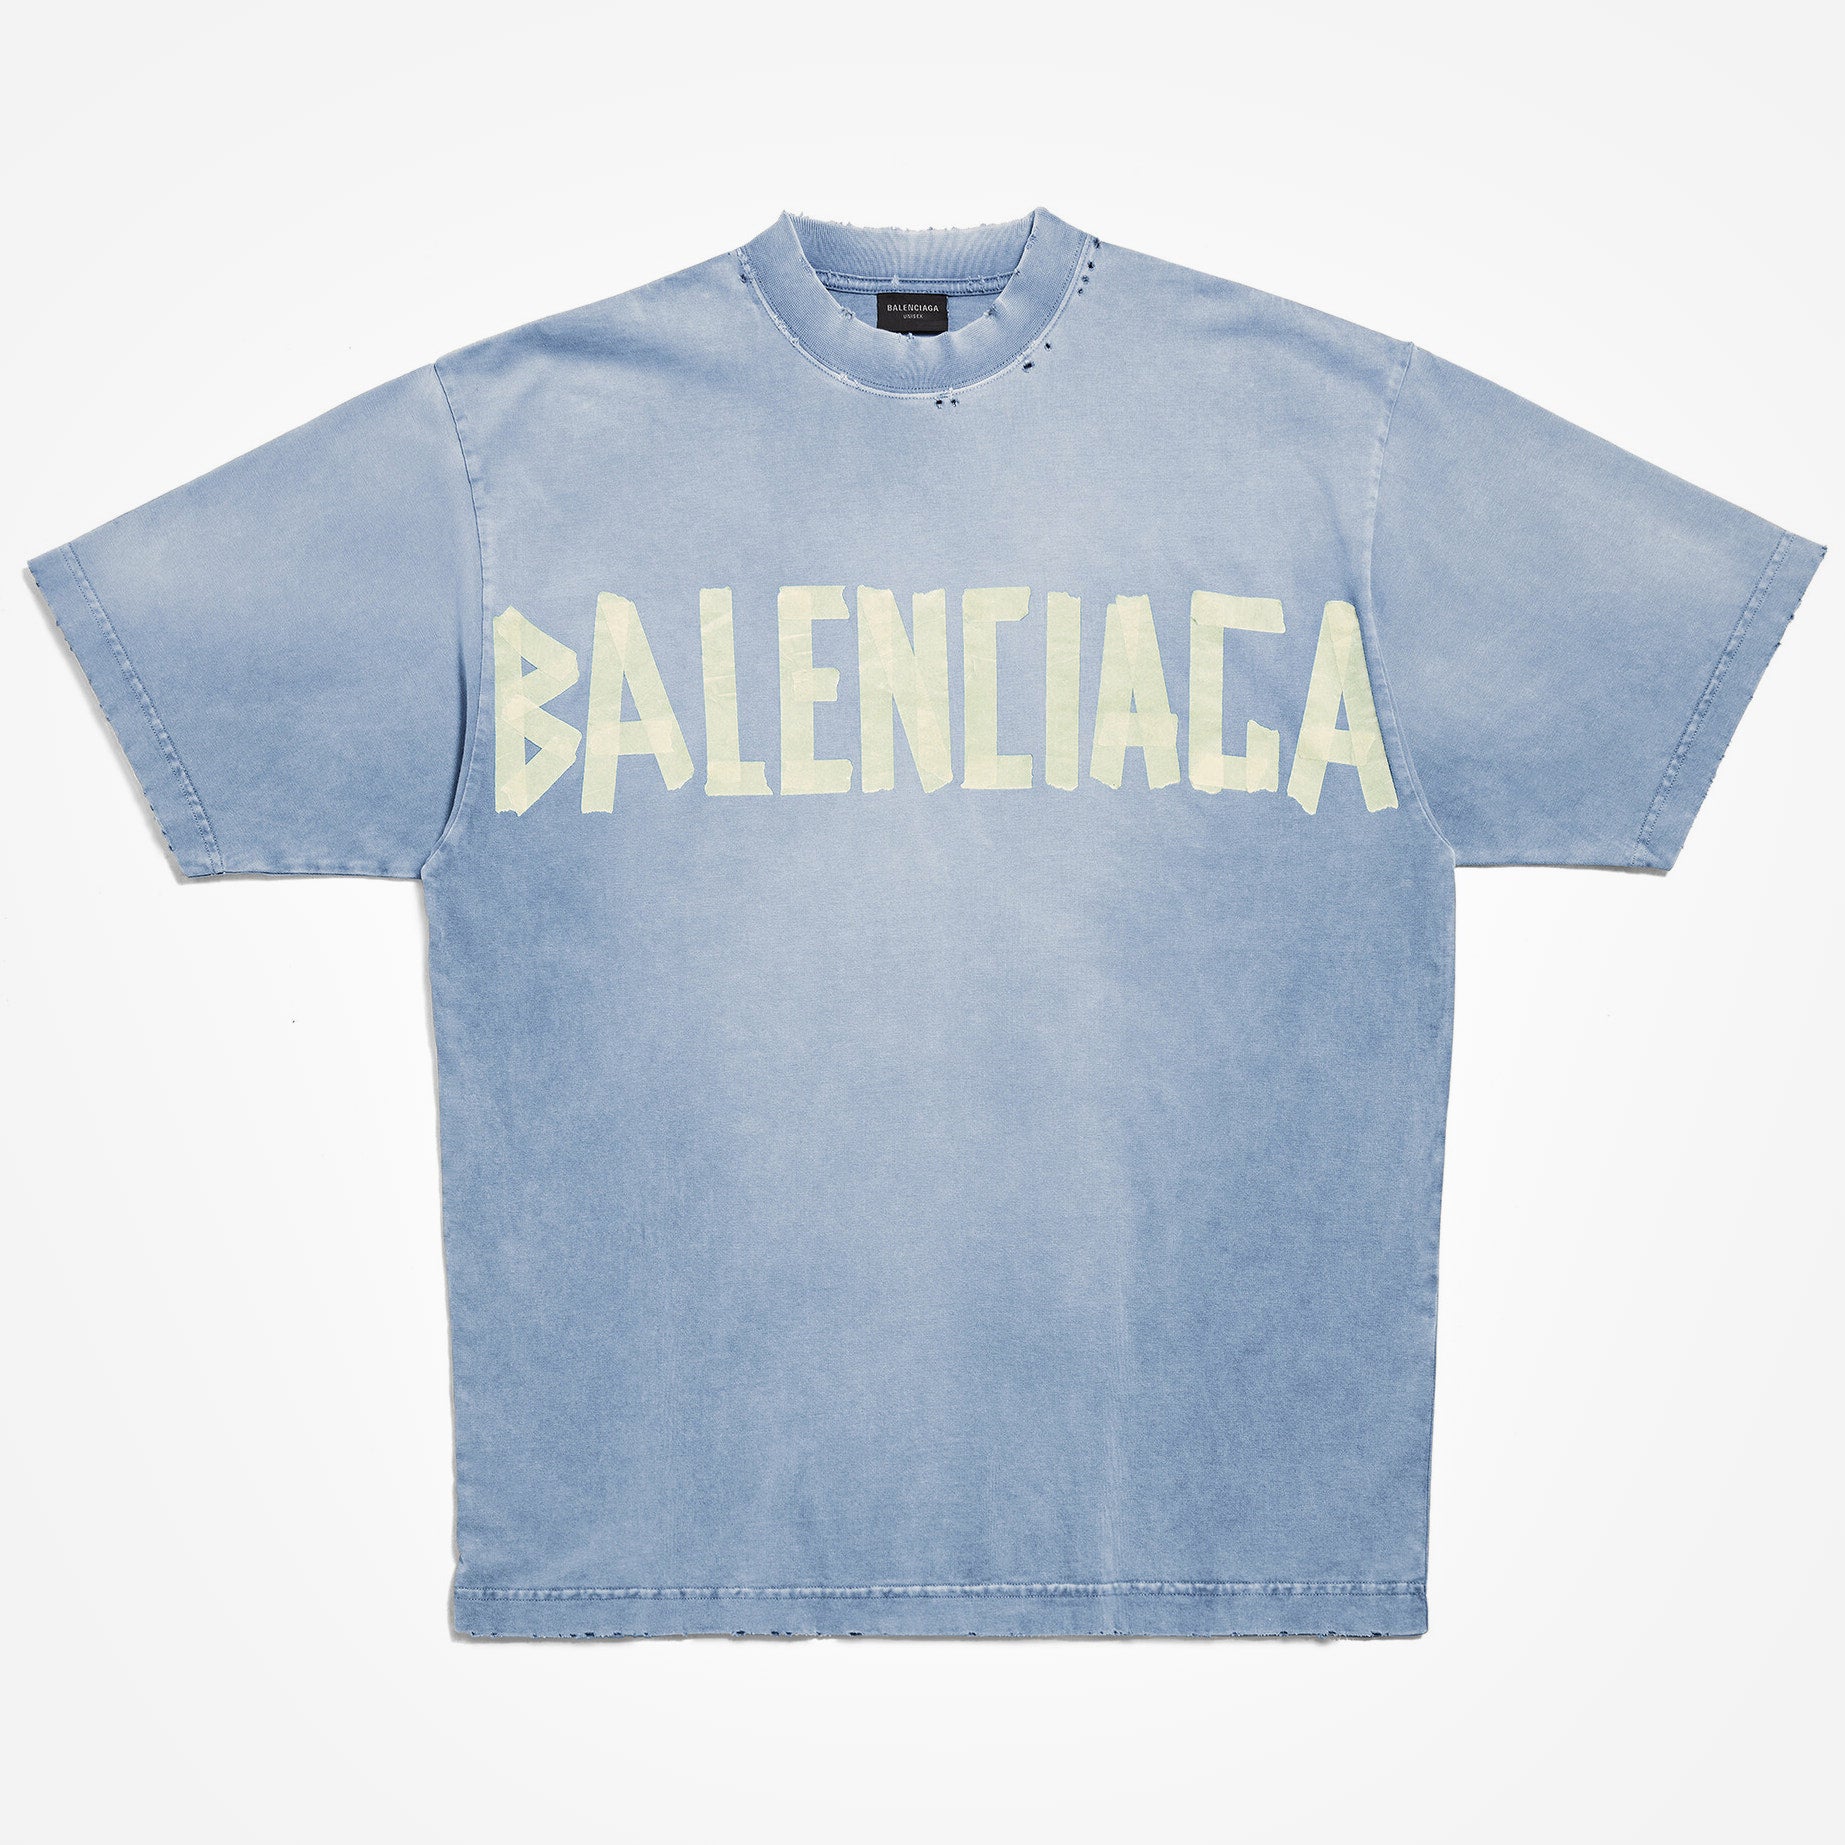 T-shirt Balenciaga Tape Type Bleu Ciel